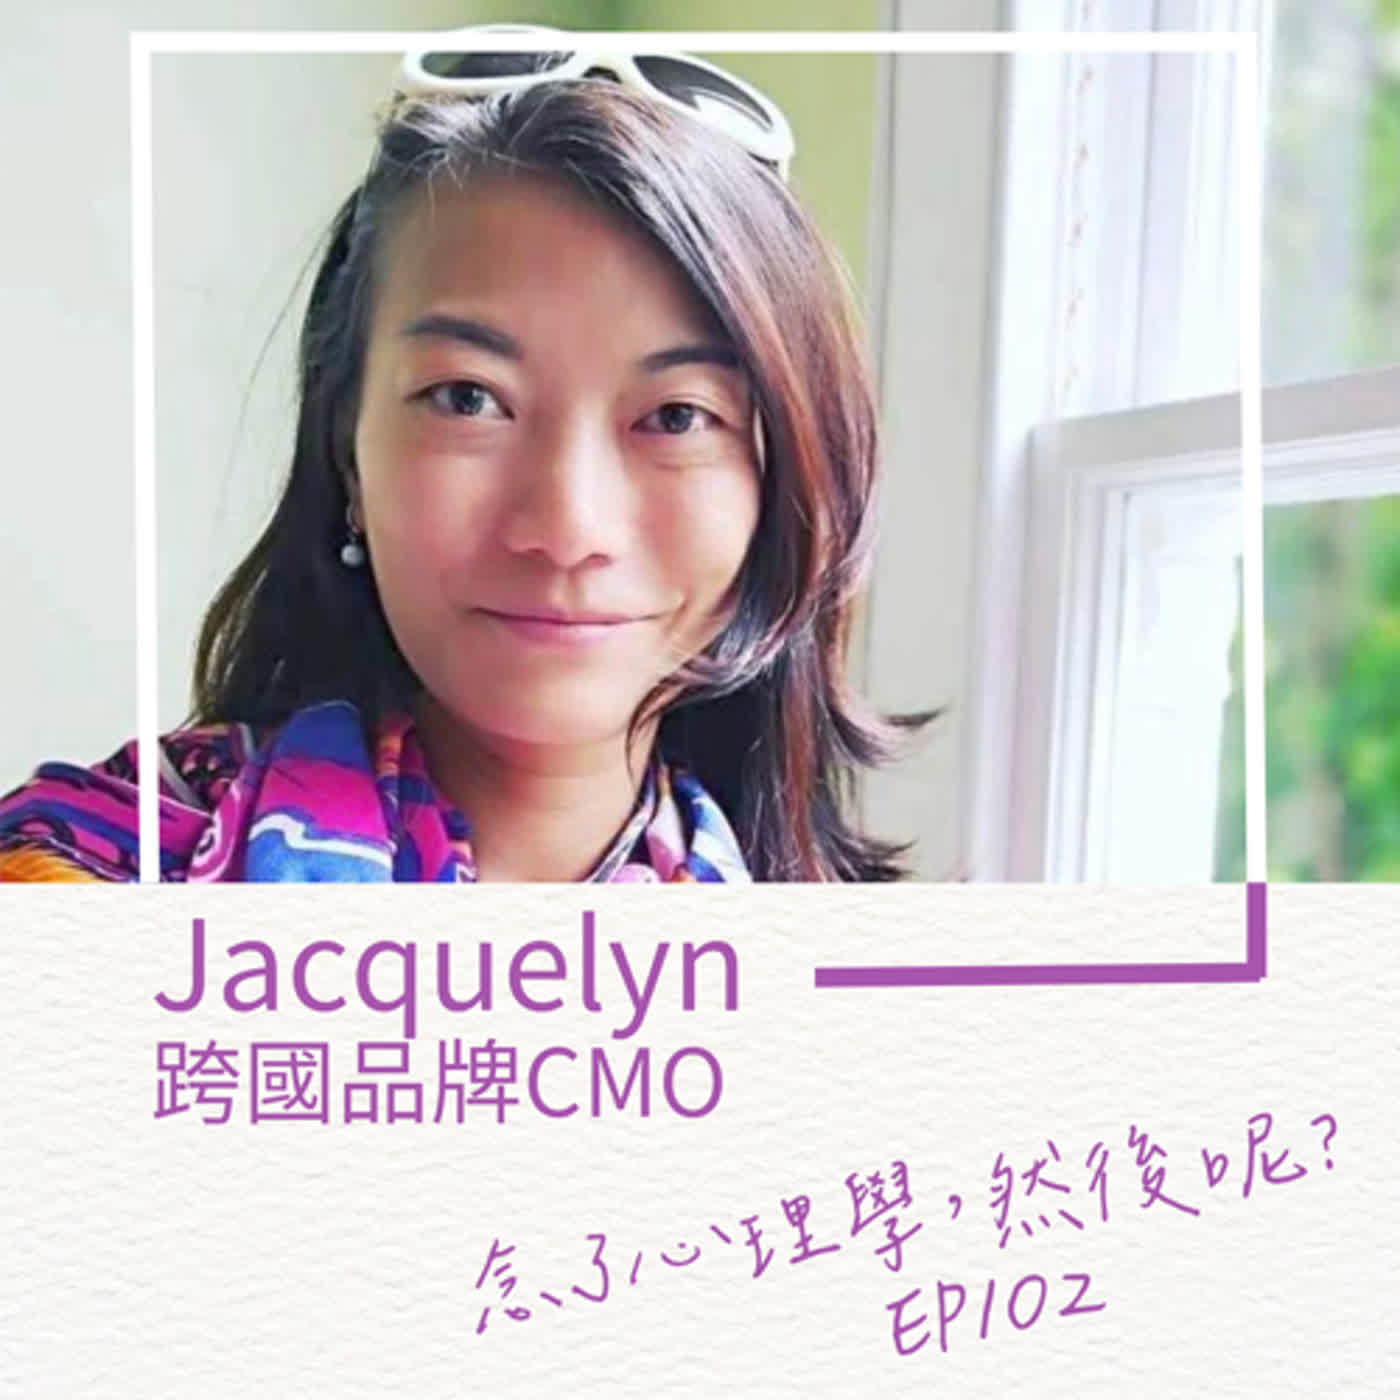 【EP102】Jacquelyn念了心理學，然後成了跨國品牌CMO